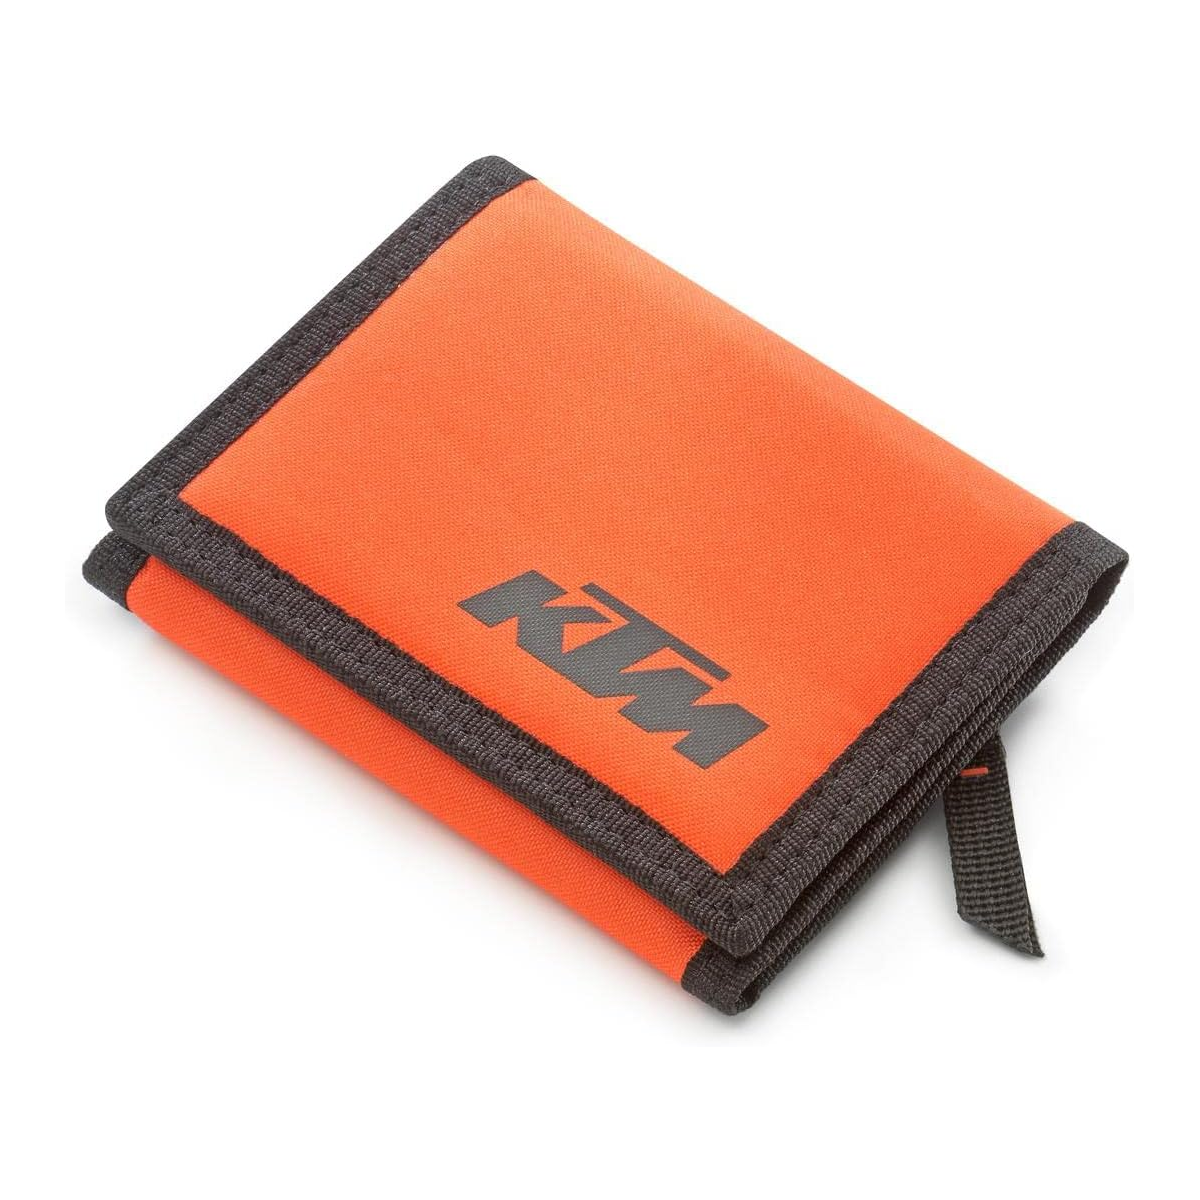 KTM Radical Wallet